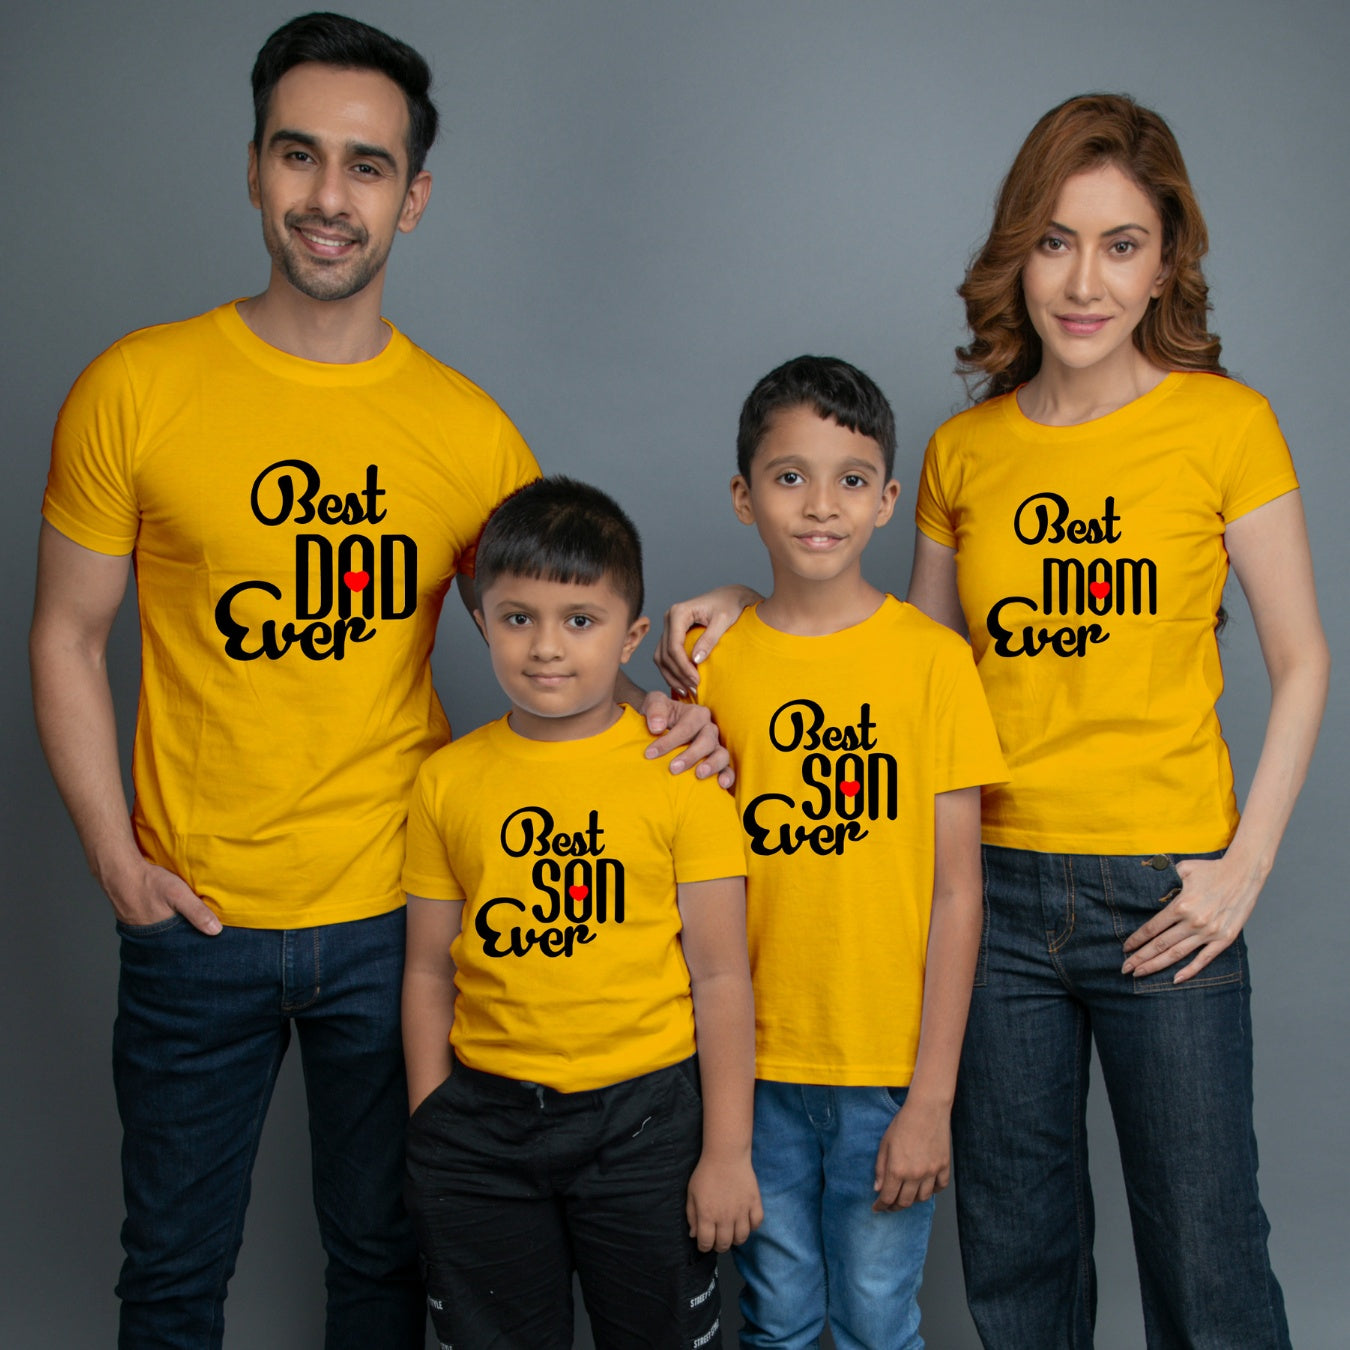 Family Cute Matching Outfits Couple Shirts T-Shirt Fashion Print T